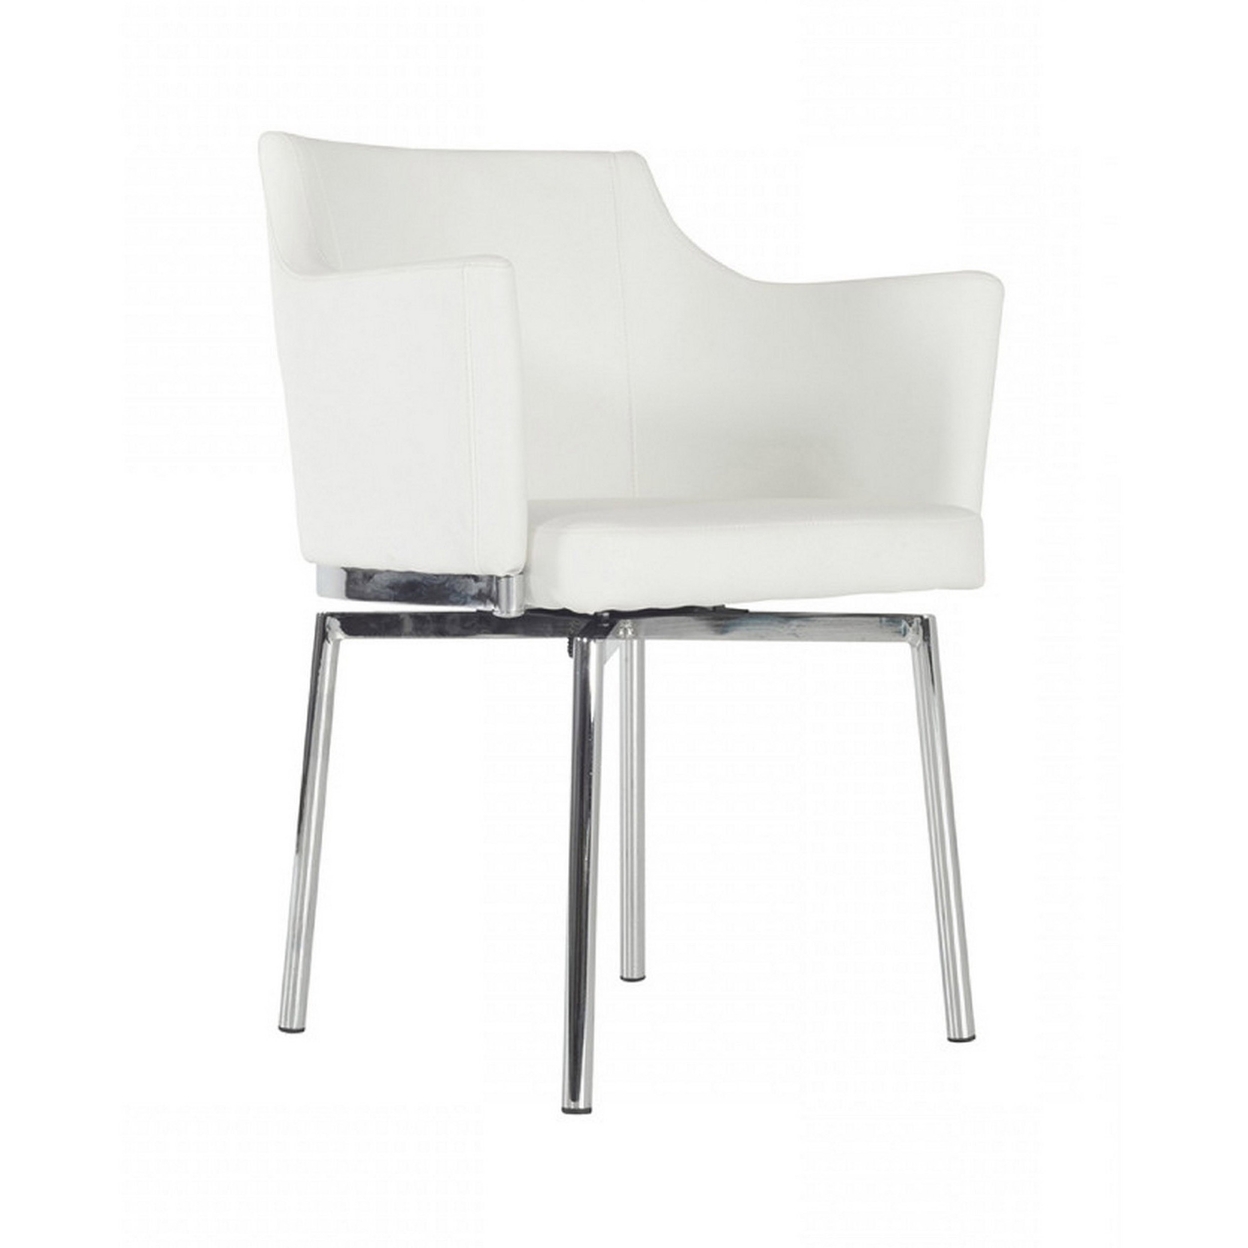 Leatherette Upholstered Swivel Dining Chair With Chrome Metal Legs, White- Saltoro Sherpi